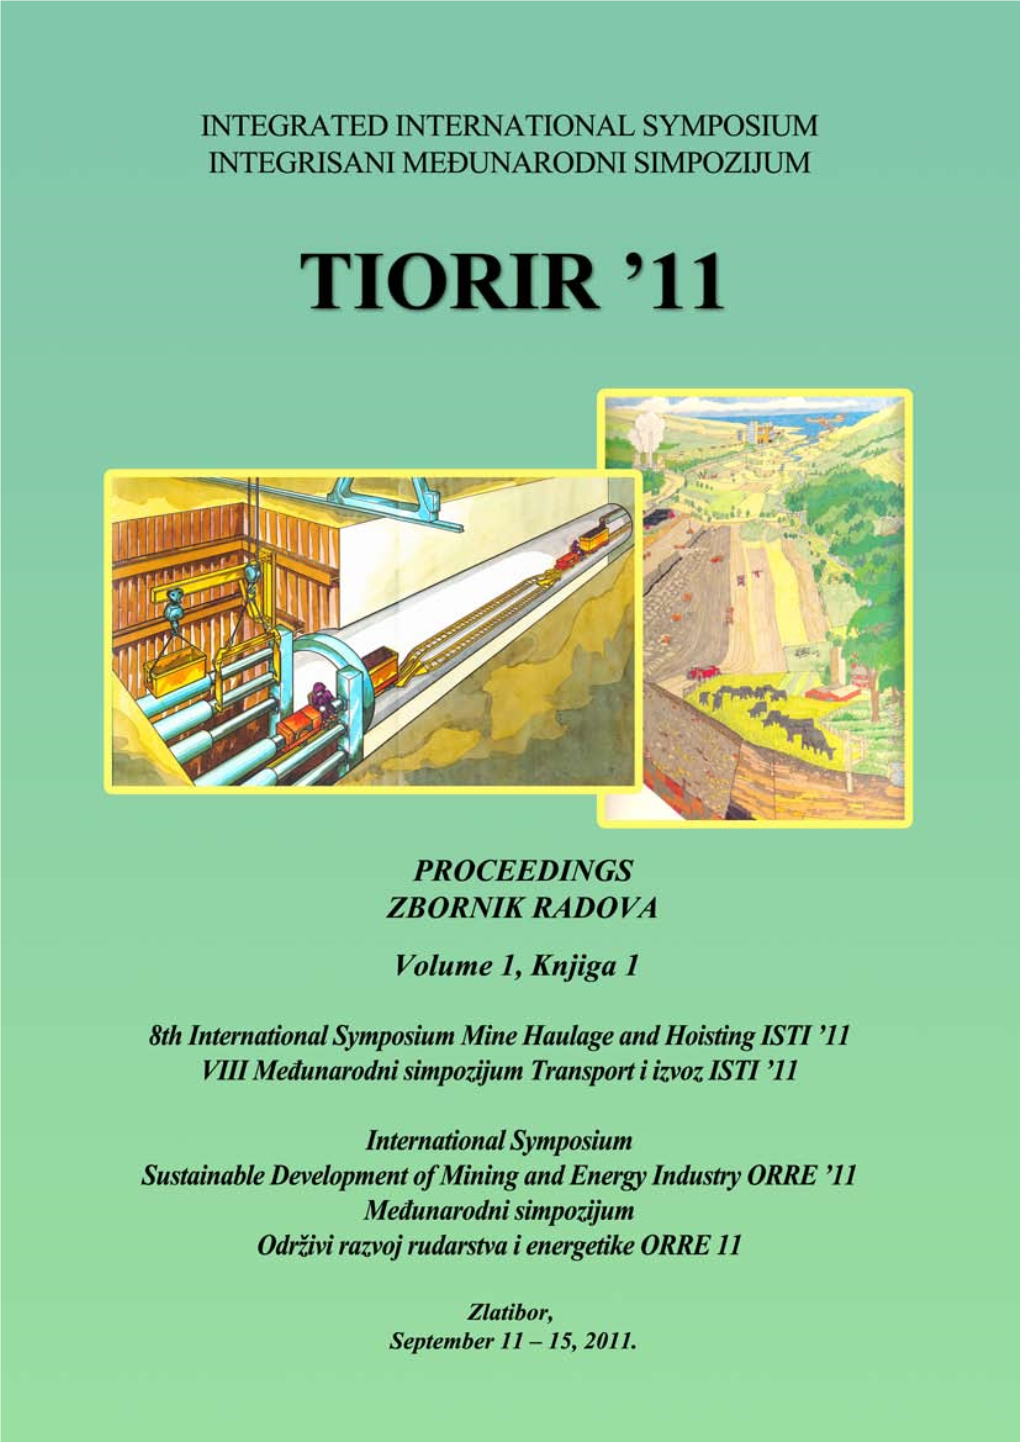 TIORIR ’11 September 11 – 15, 2011., Zlatibor, Hotel Mona